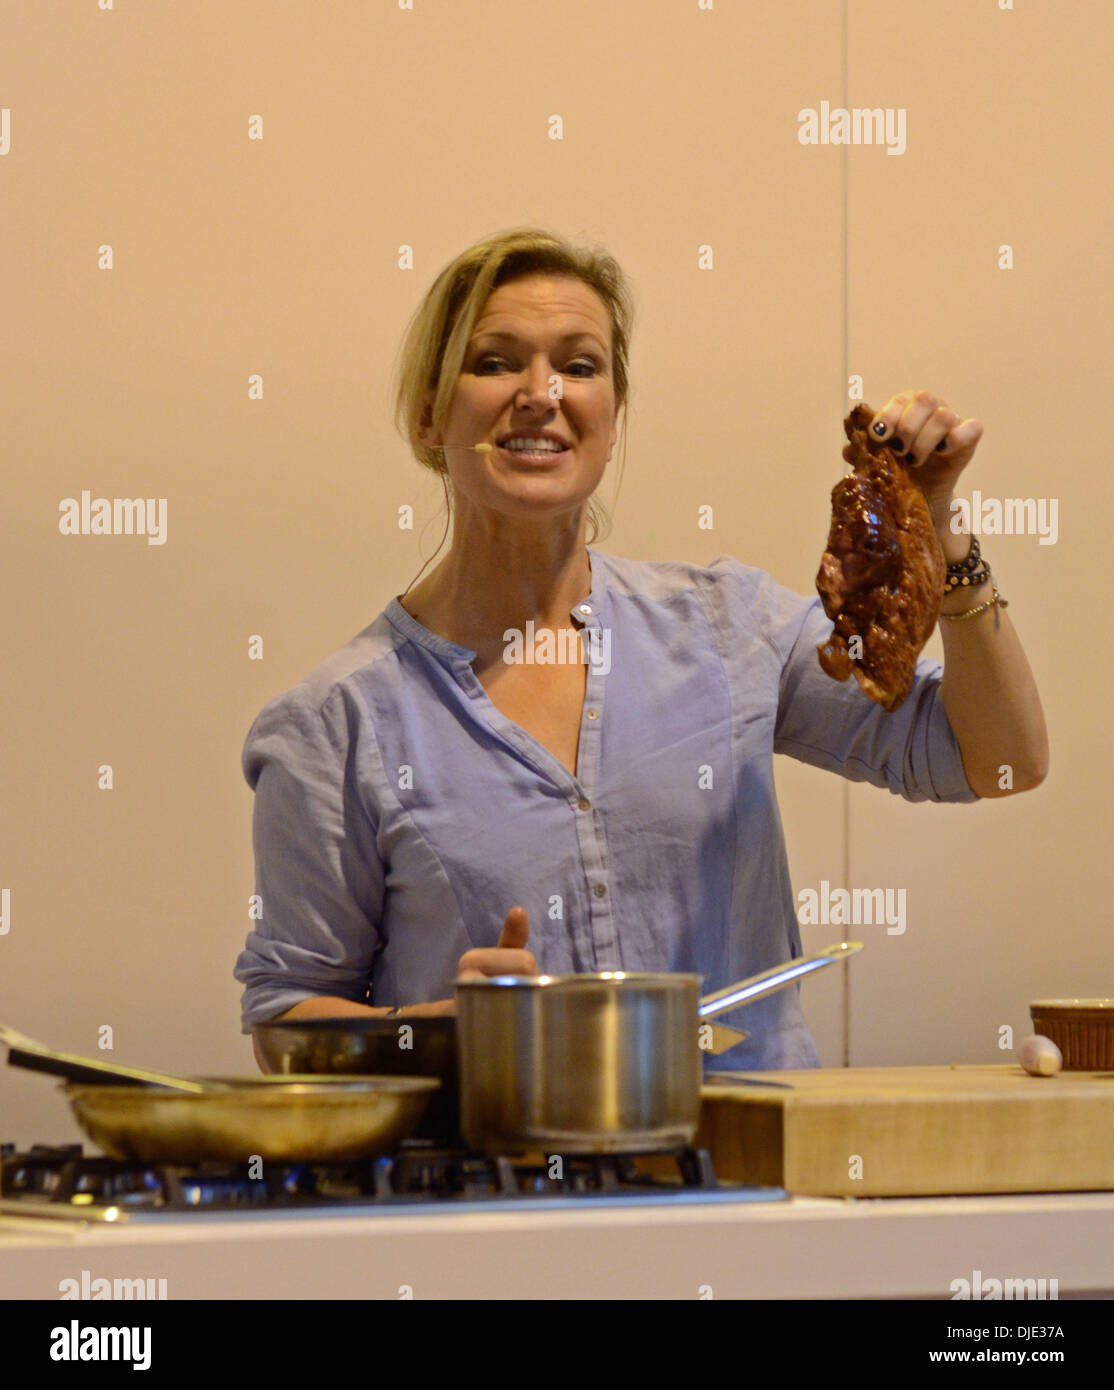 Rachel allen chef hi-res stock photography and images - Alamy